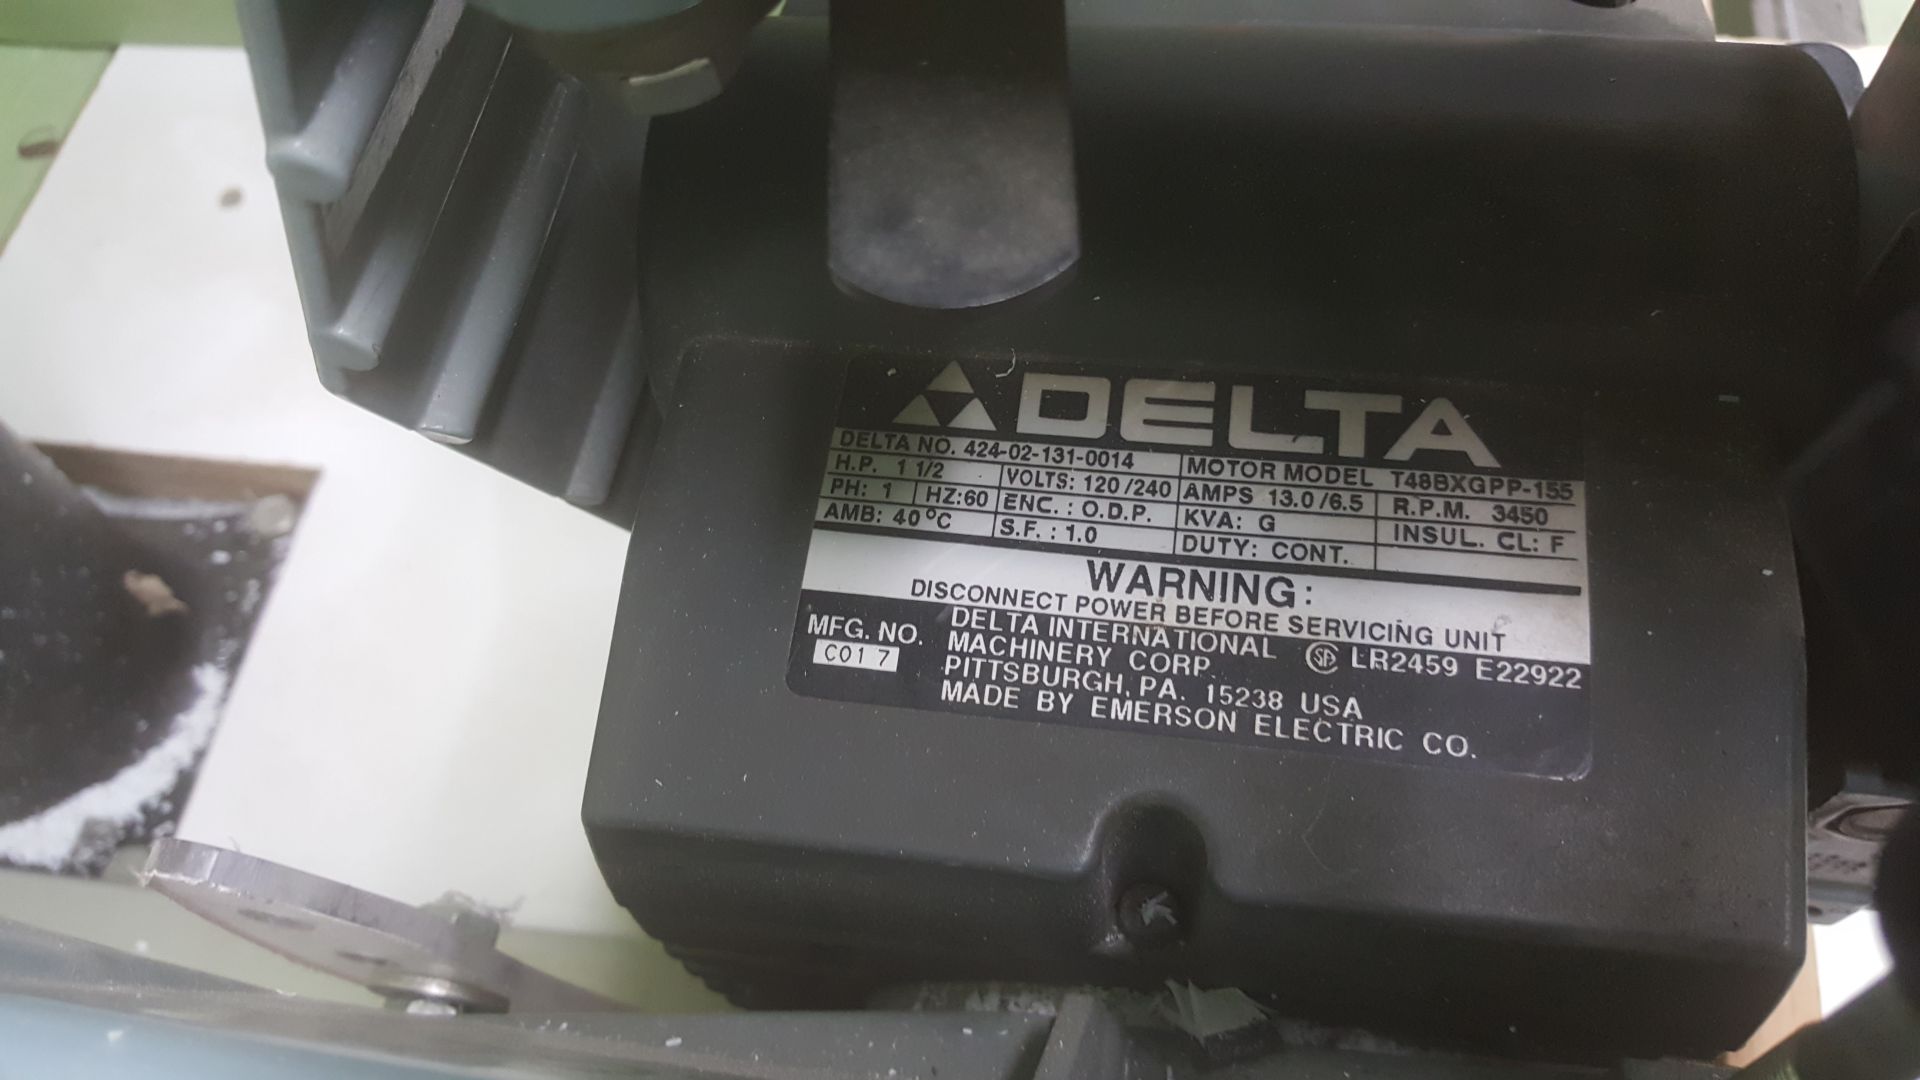 DELTA radial arm saw mod.424-02-131-0014 on metal frame - Image 3 of 3